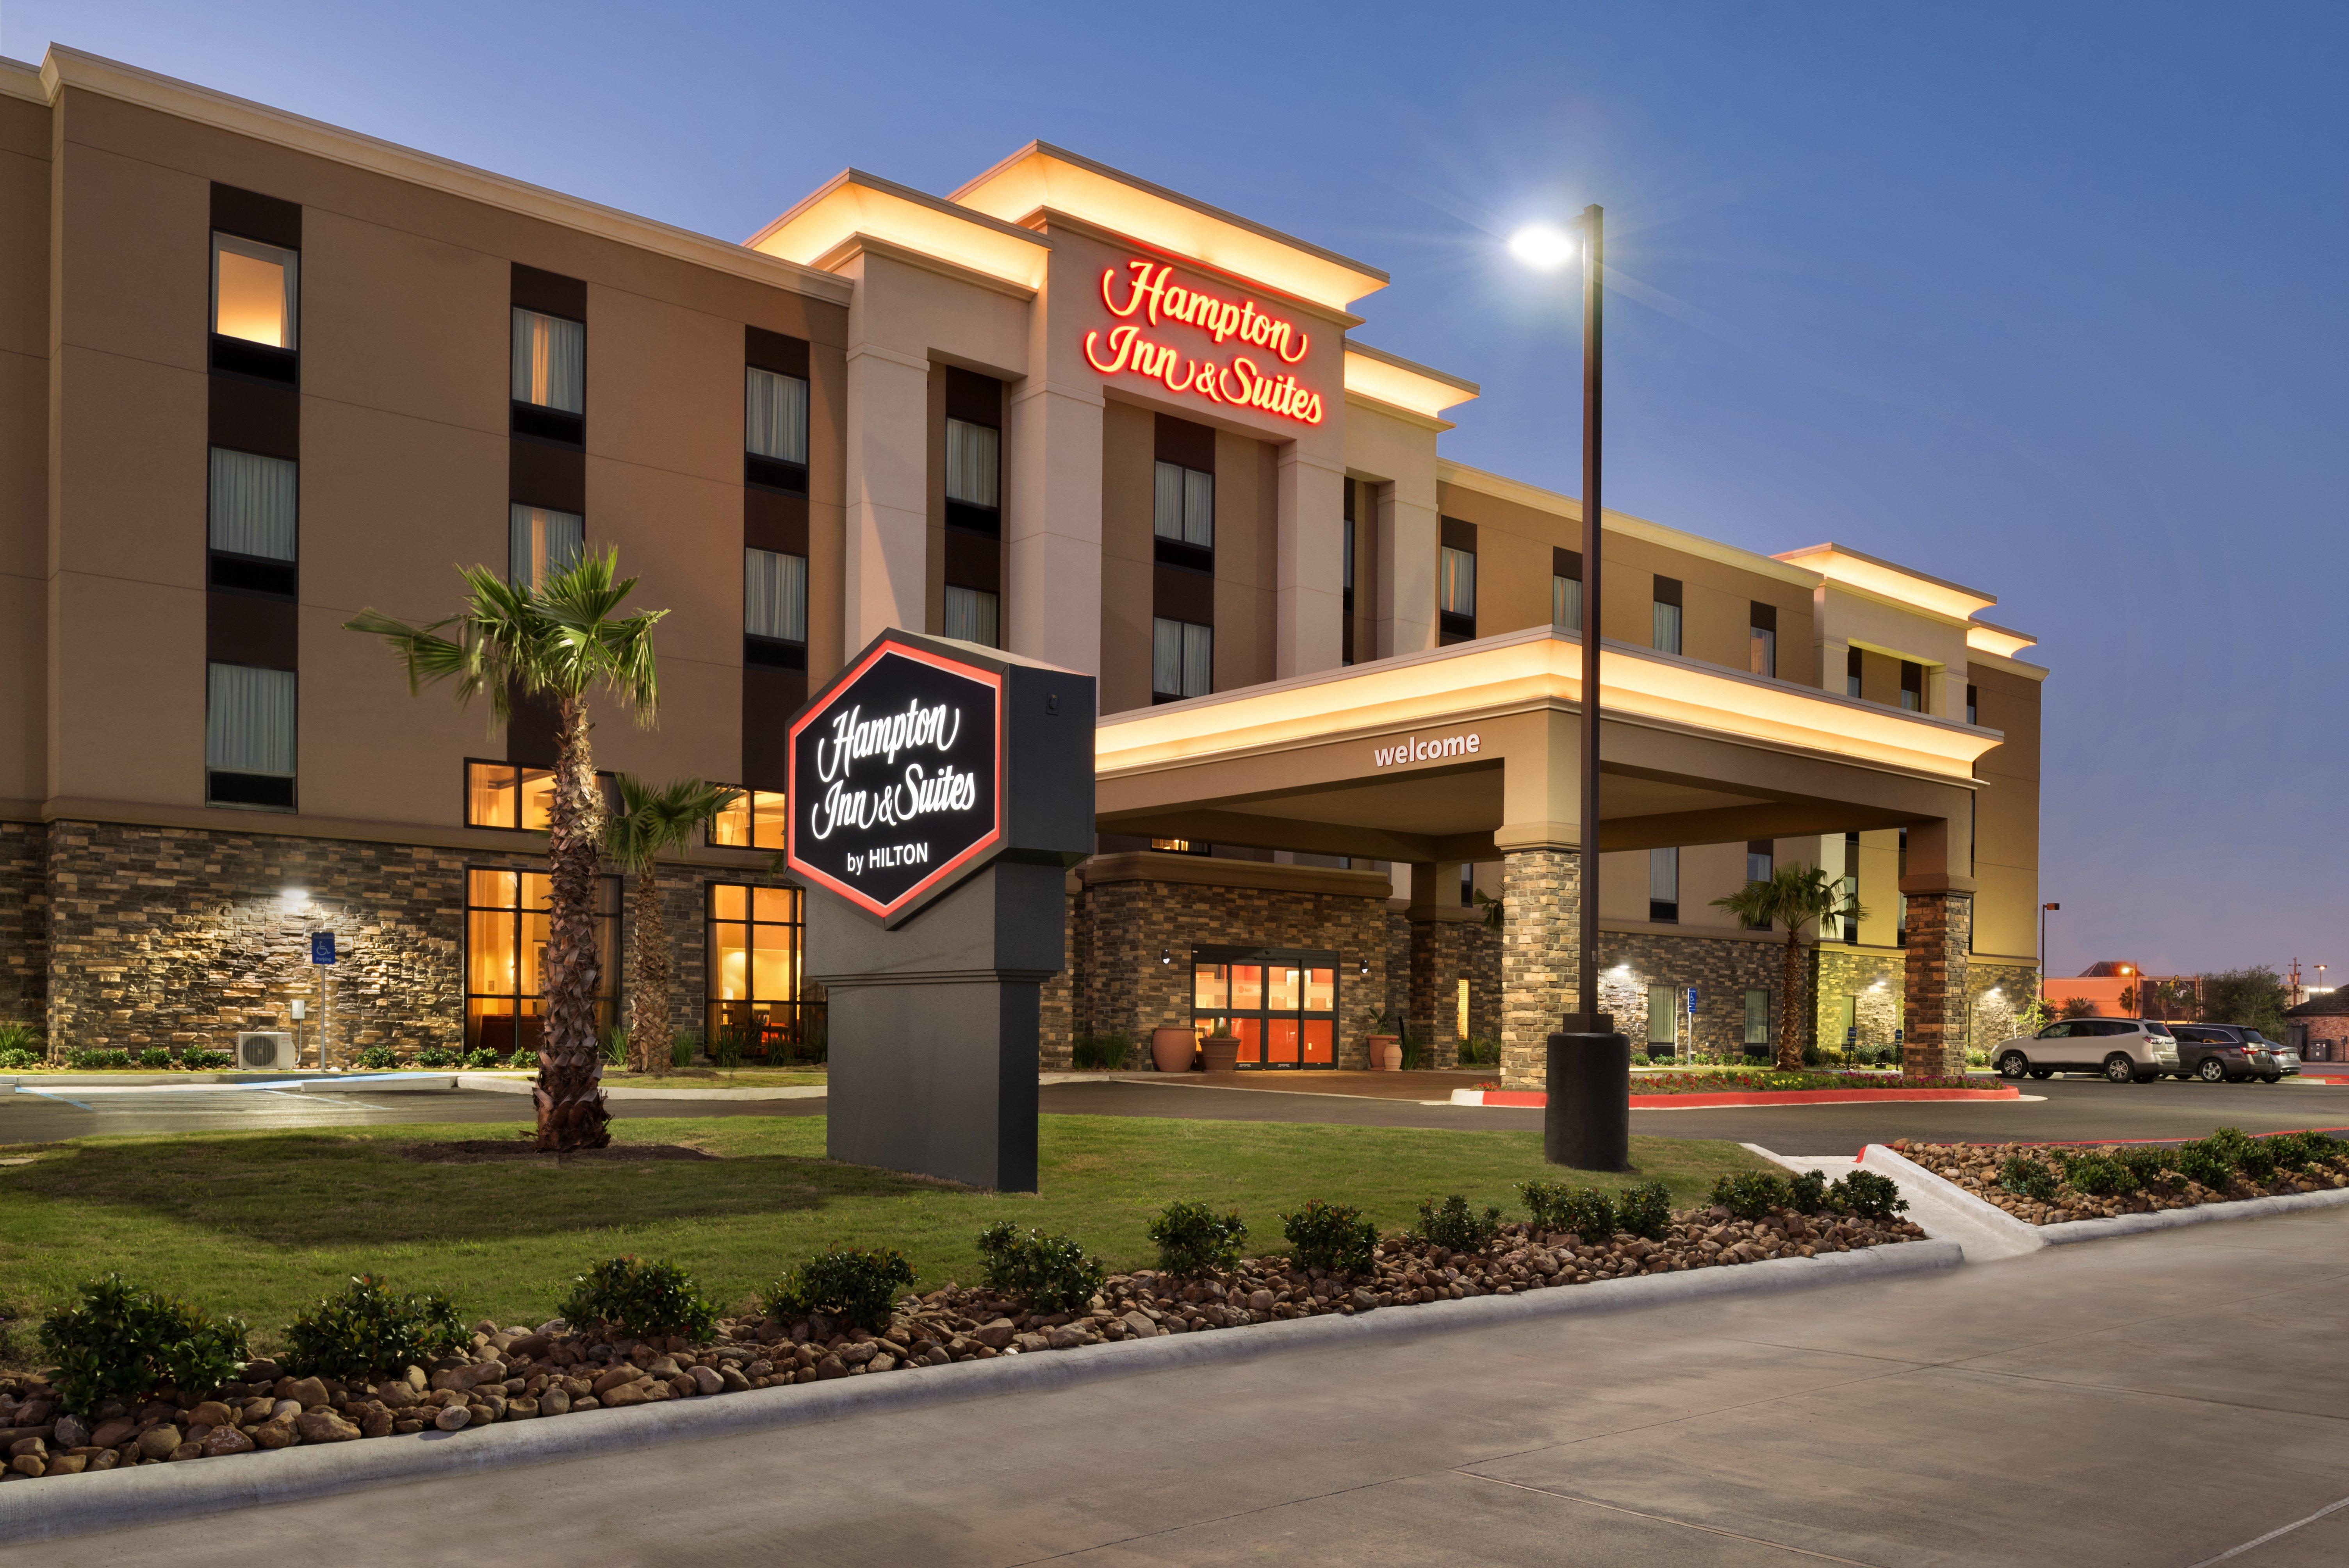 Hotel photo 1 of Hampton Inn & Suites Corpus Christi.